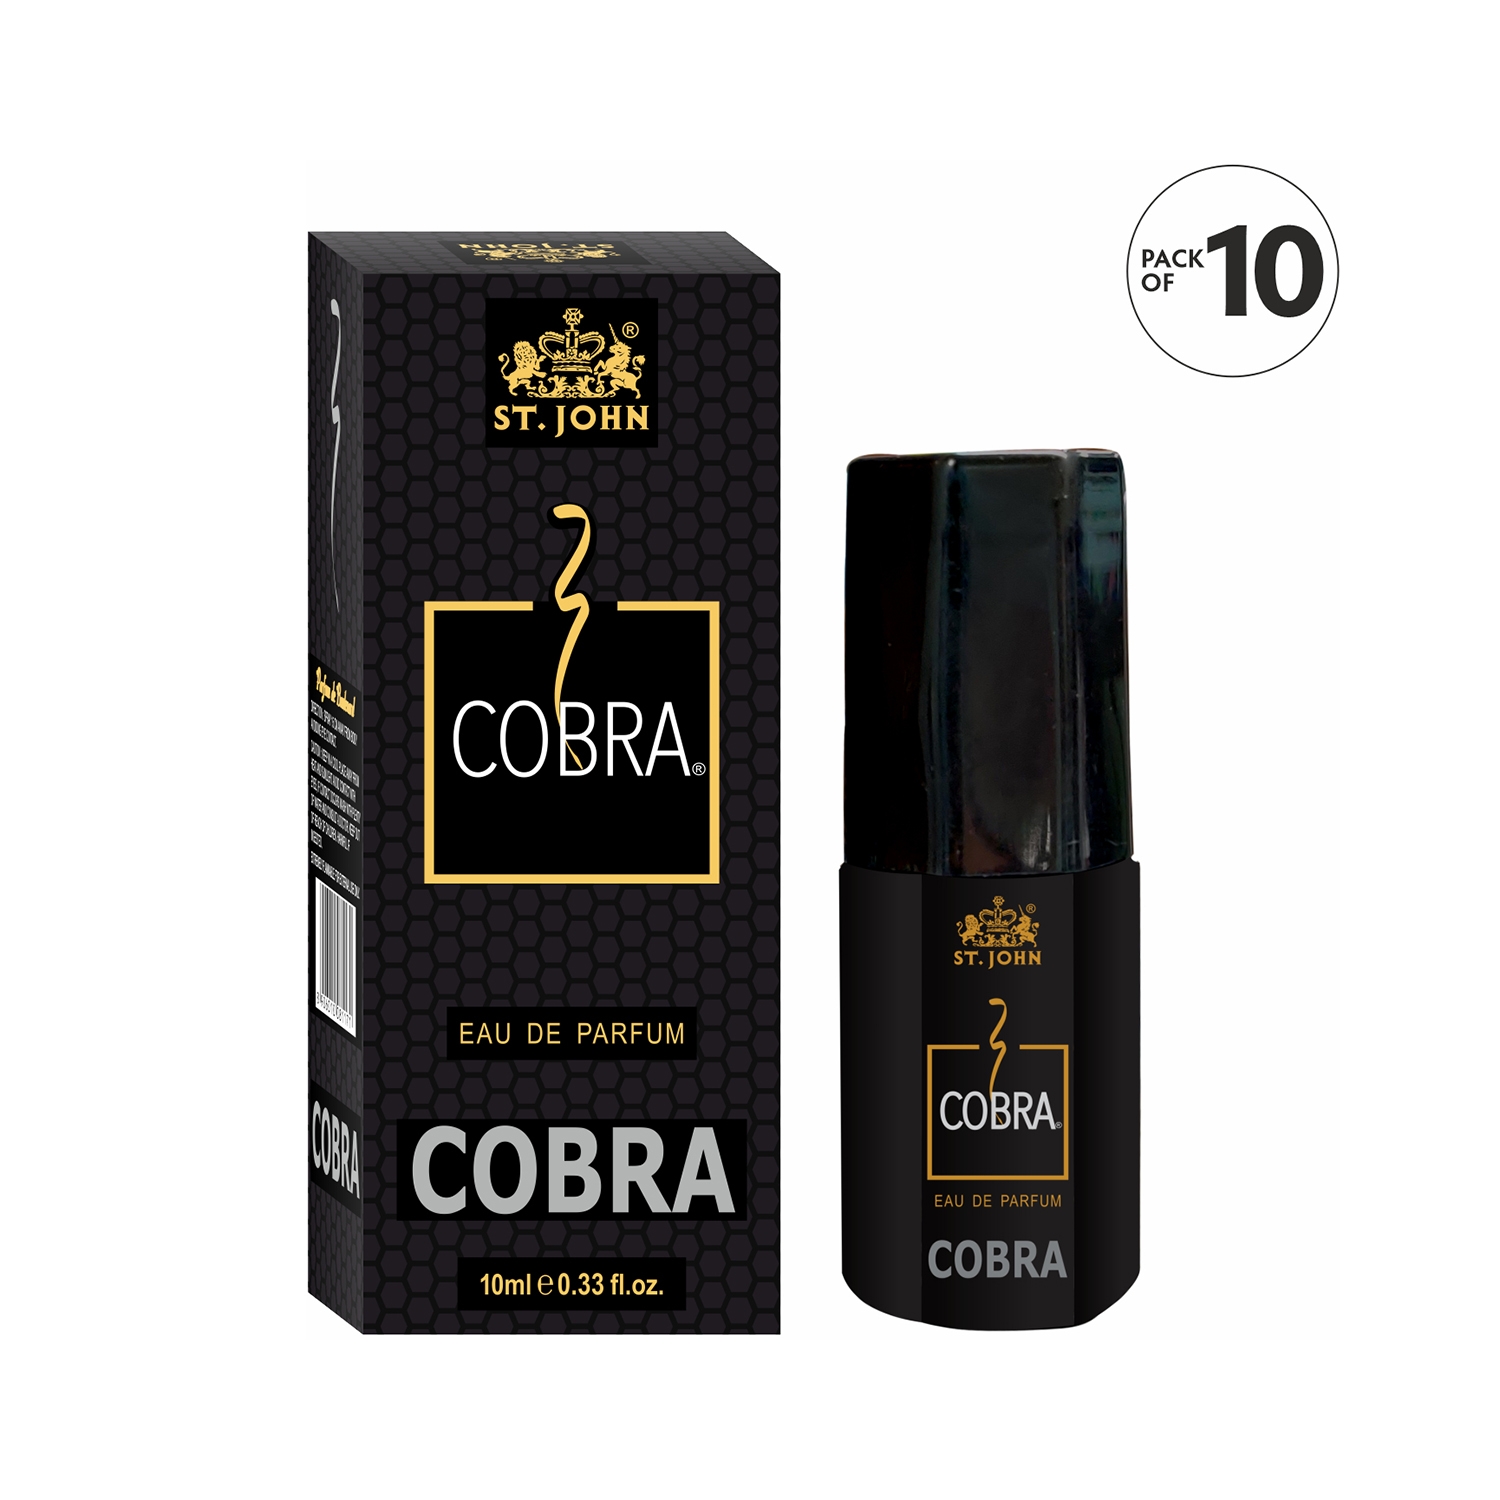 ST.JOHN Cobra Eau De Parfum (12 Pcs)